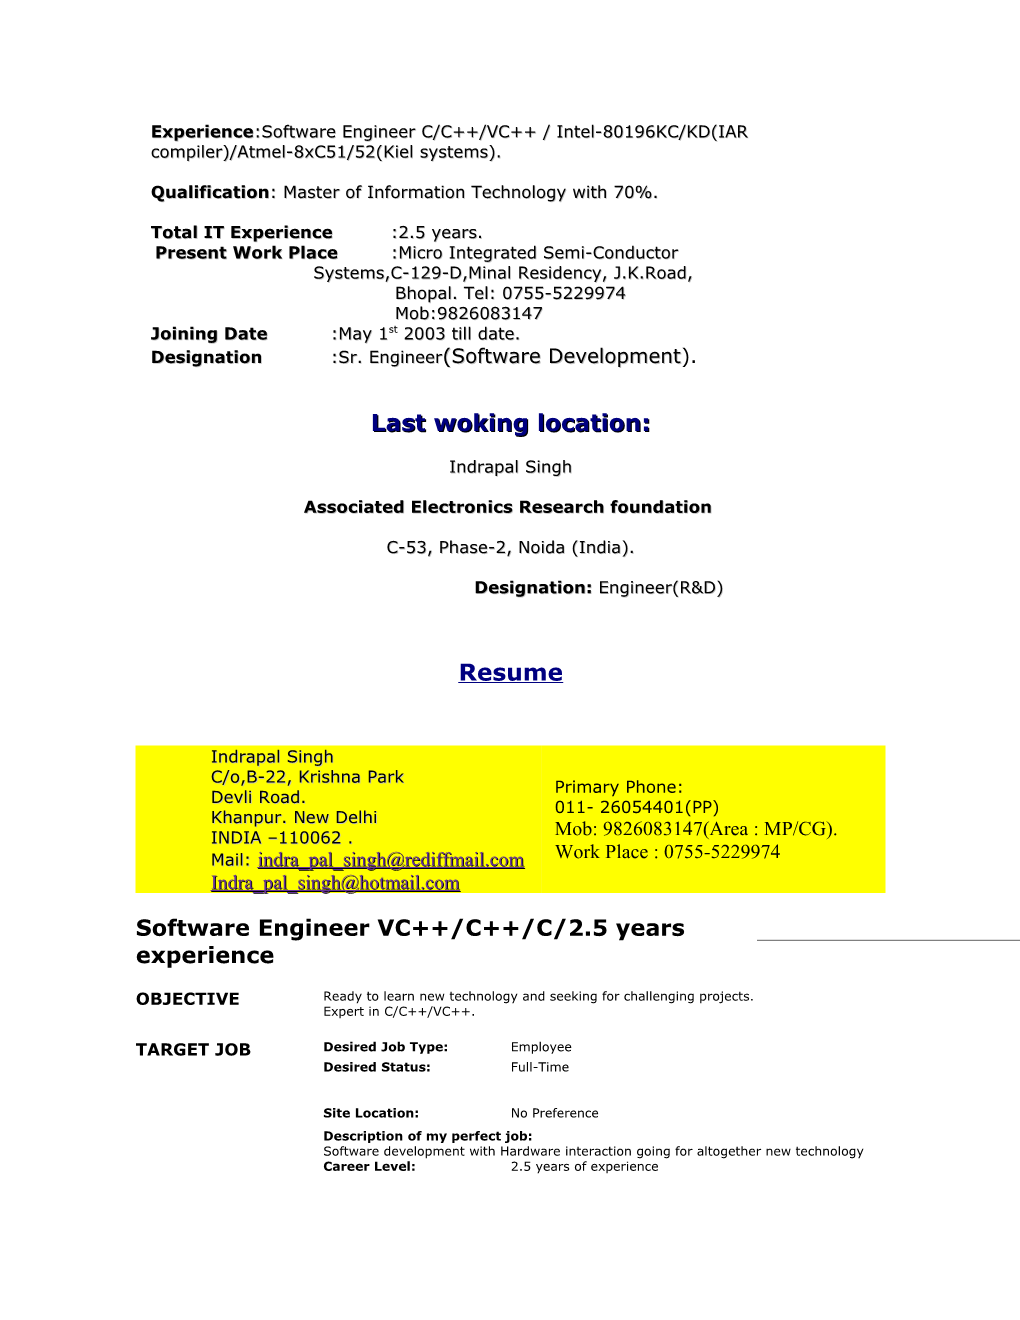 Experience:Software Engineer C/C /VC / Intel-80196KC/KD(IAR Compiler)/Atmel-8Xc51/52(Kiel